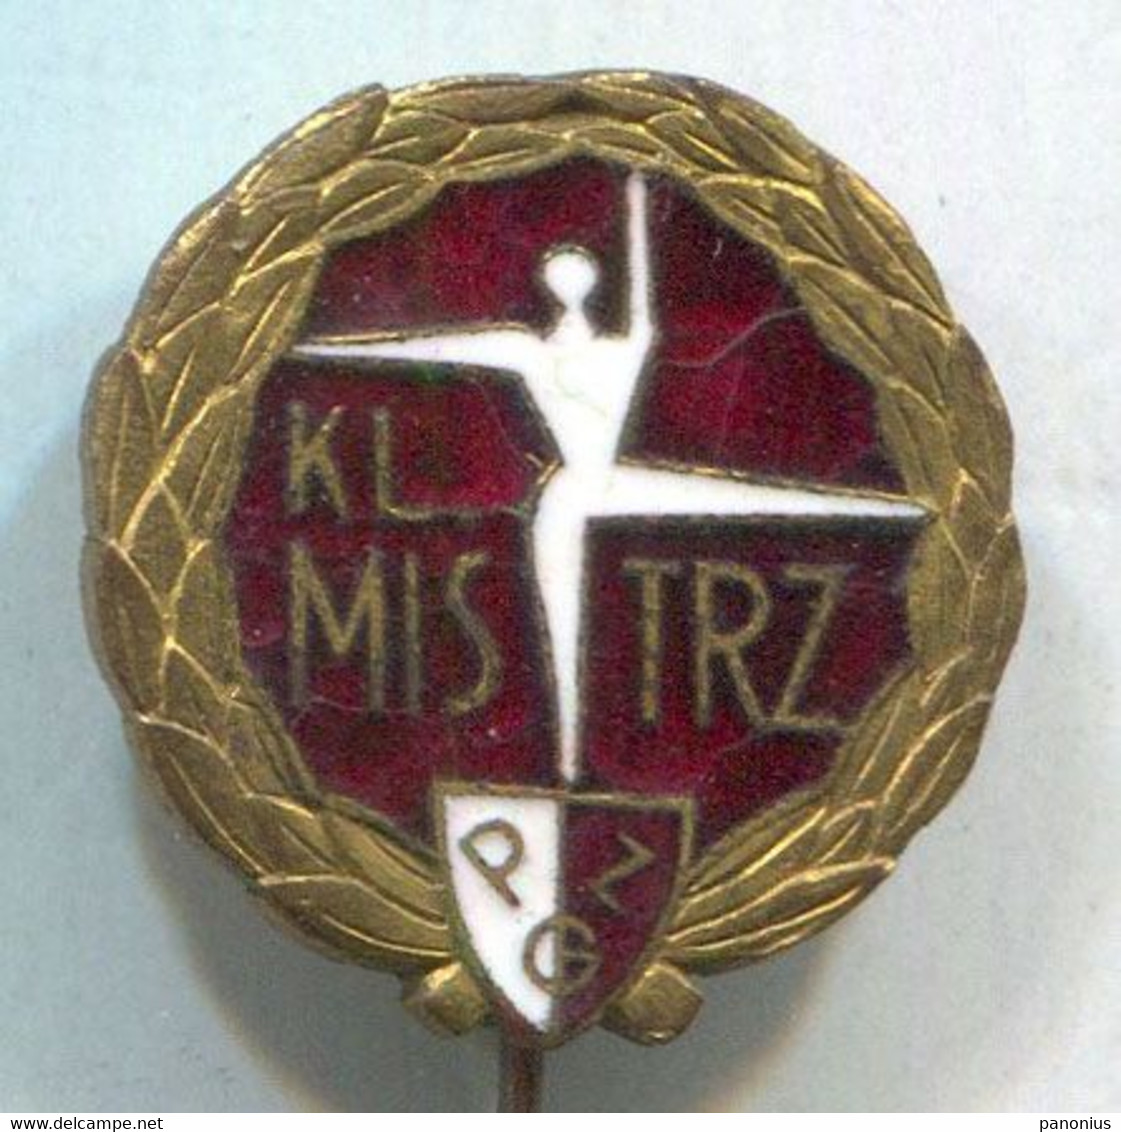 Gymnastics - Poland Federation, Vintage Pin Badge Abzeichen, Enamel - Gymnastics